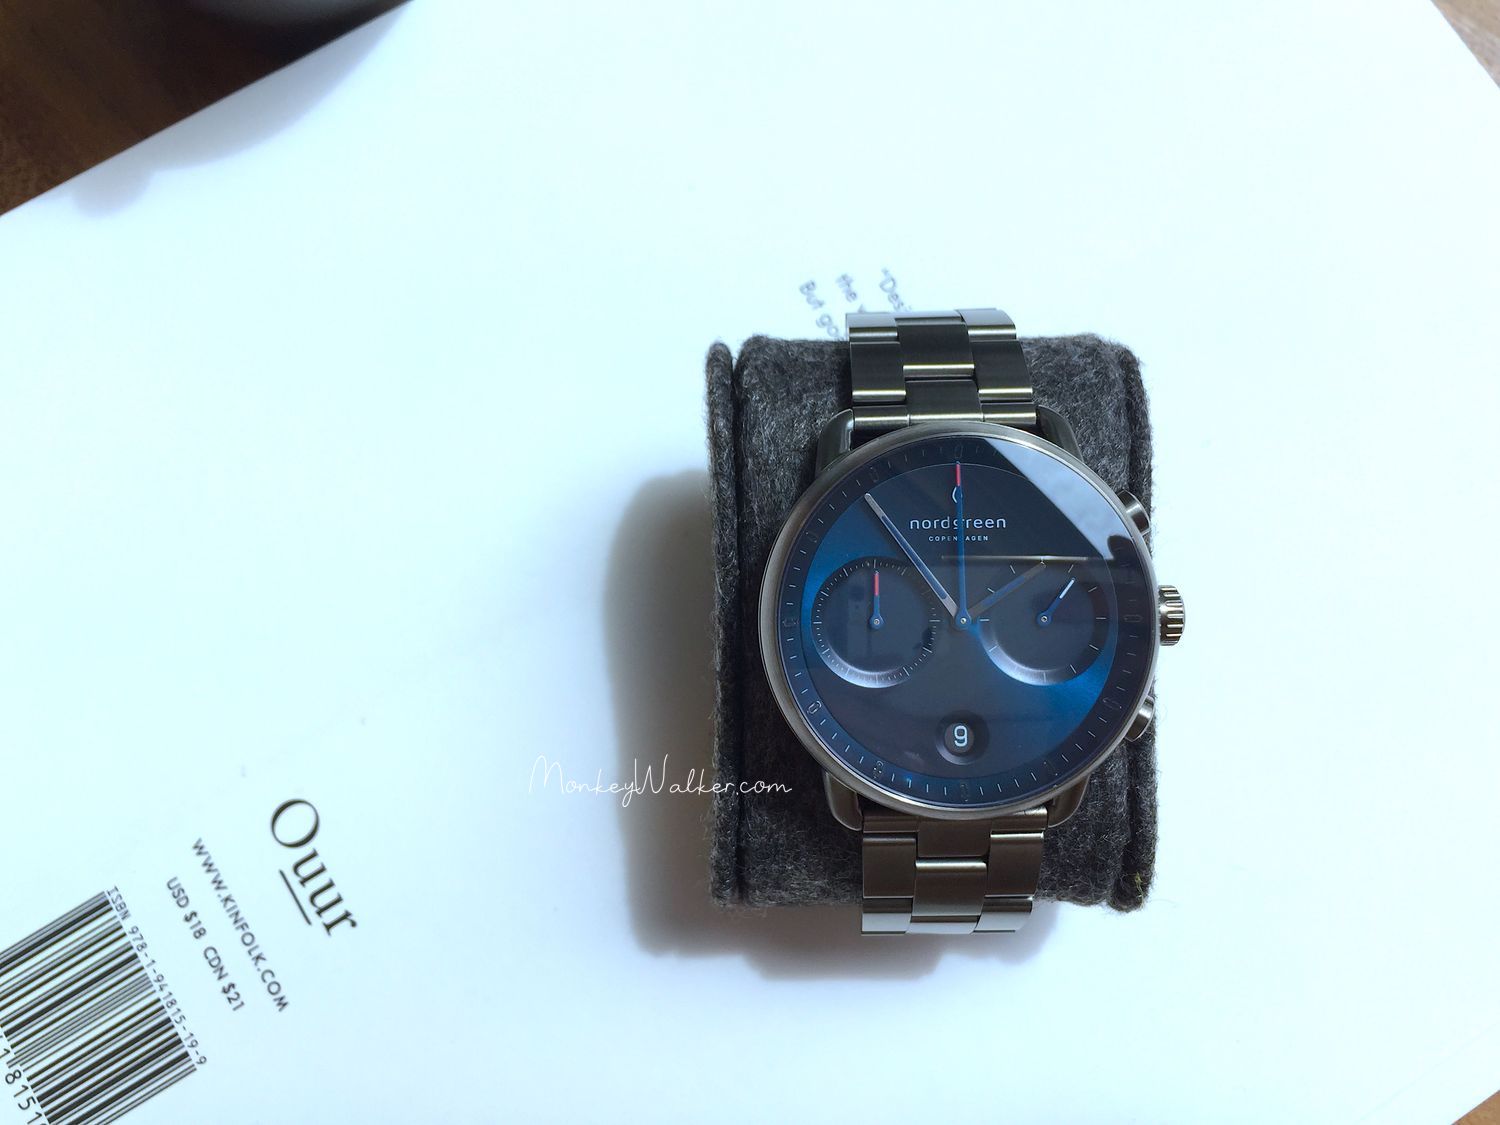 Nordgreen Pioneer先鋒系列，錶盤顏色是北歐藍、錶匡顏色是深灰色。